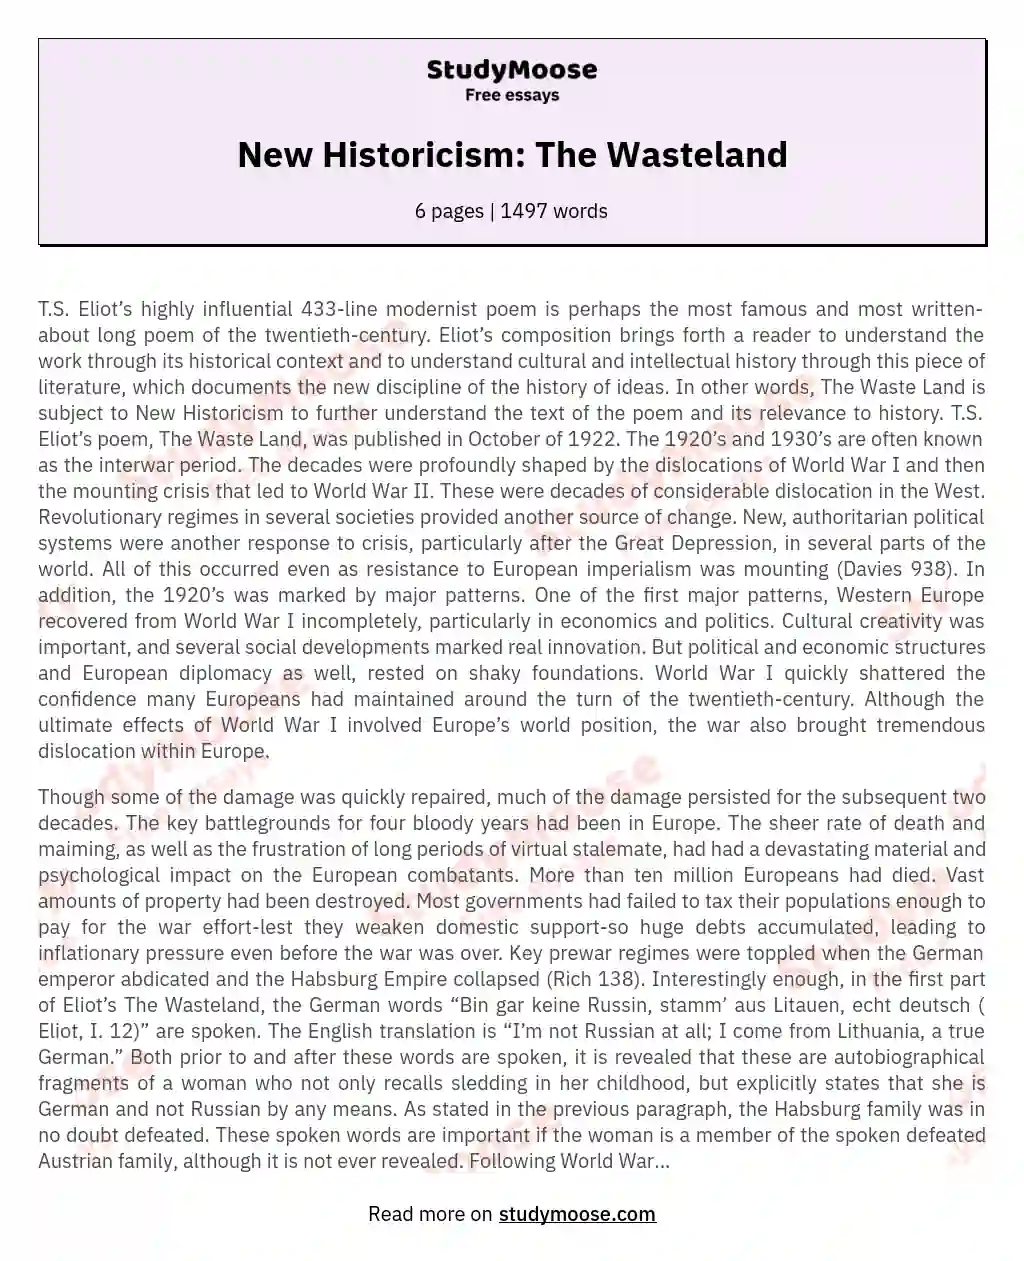 New Historicism: The Wasteland essay